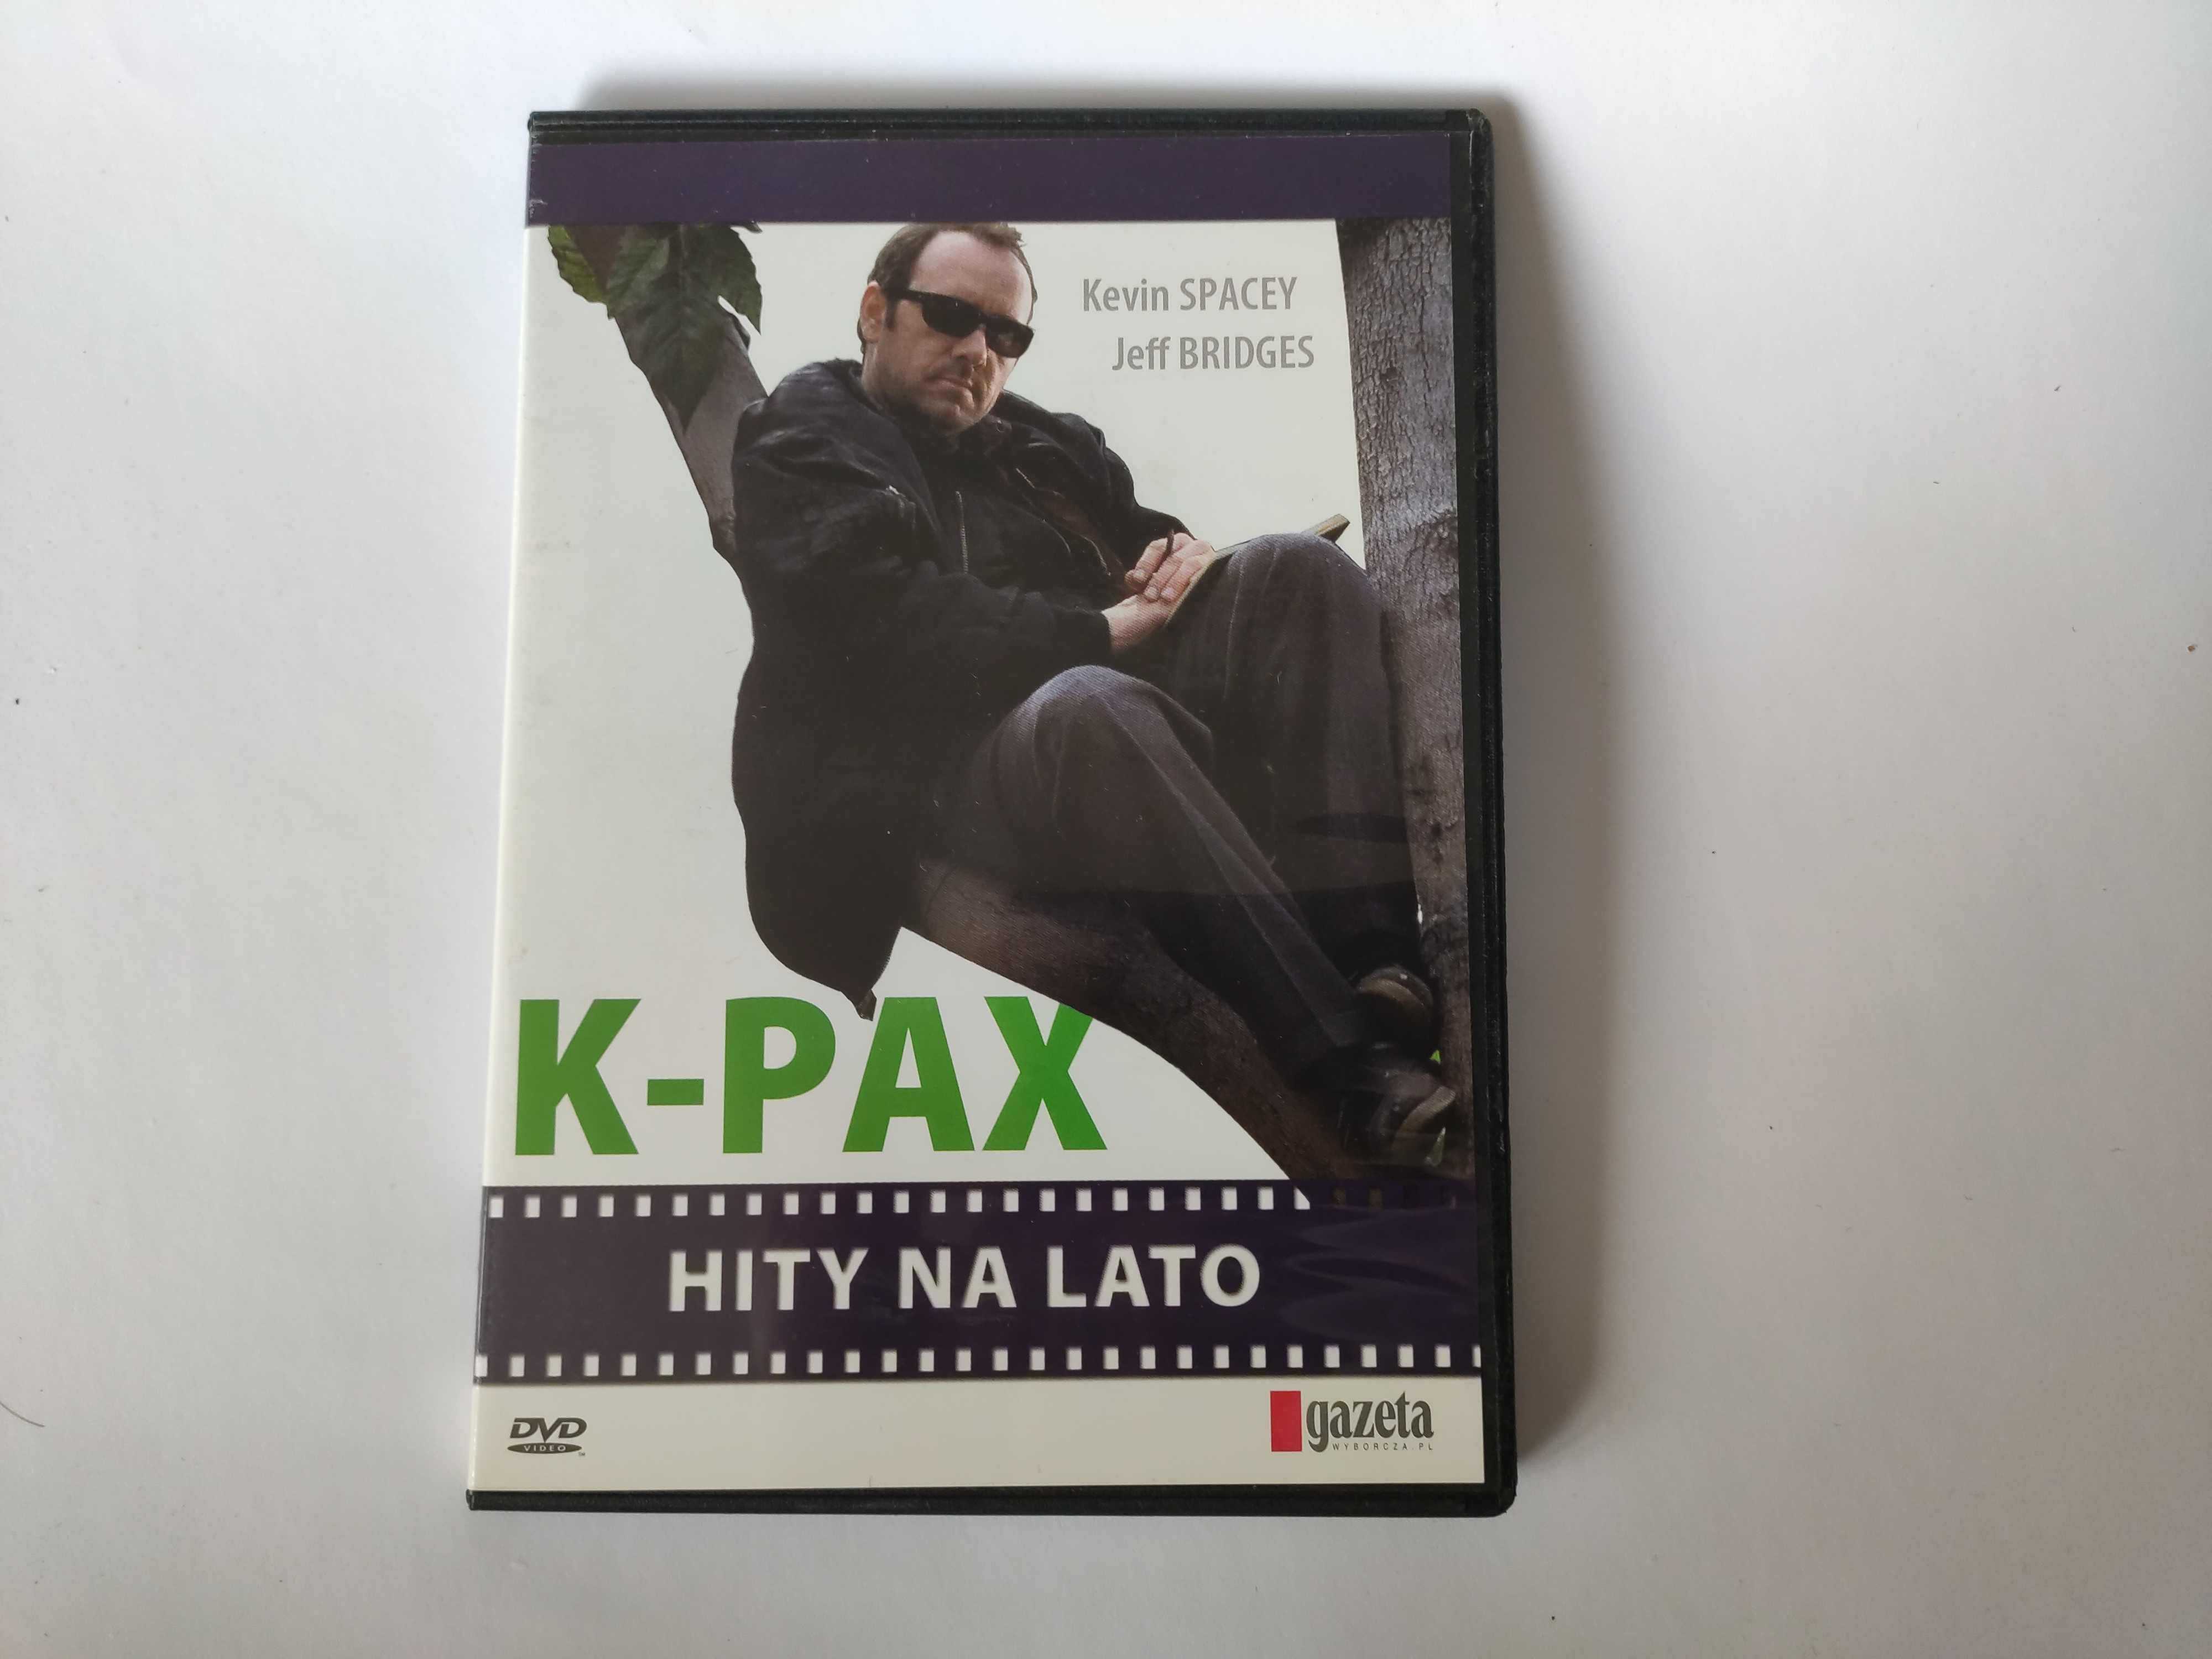 Film DVD "K-PAX" Kevin Spacey, J.Bridges